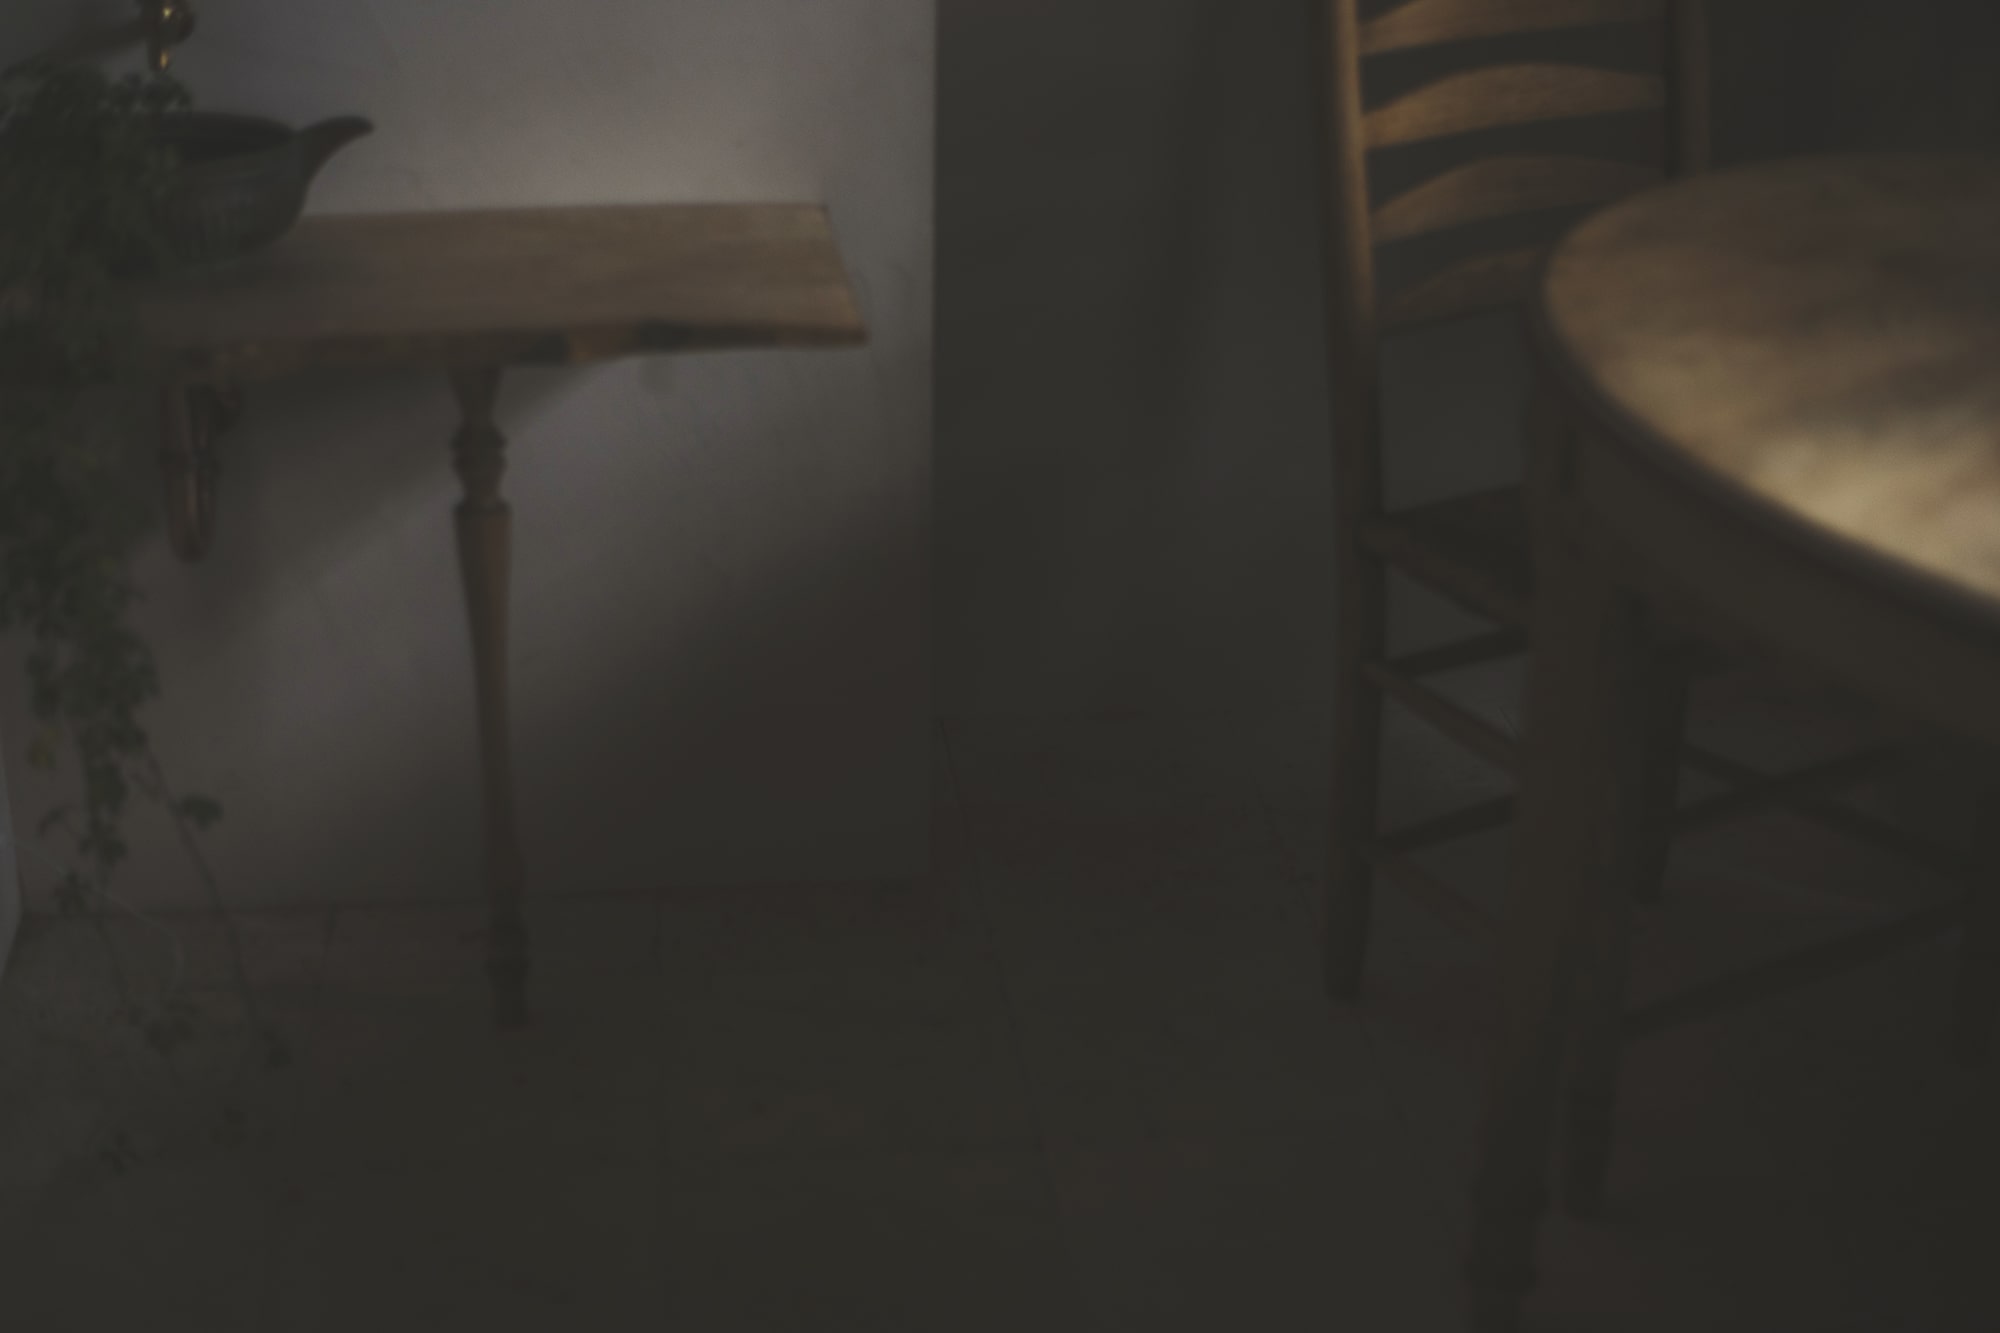 Wooden furniture in dark tone room